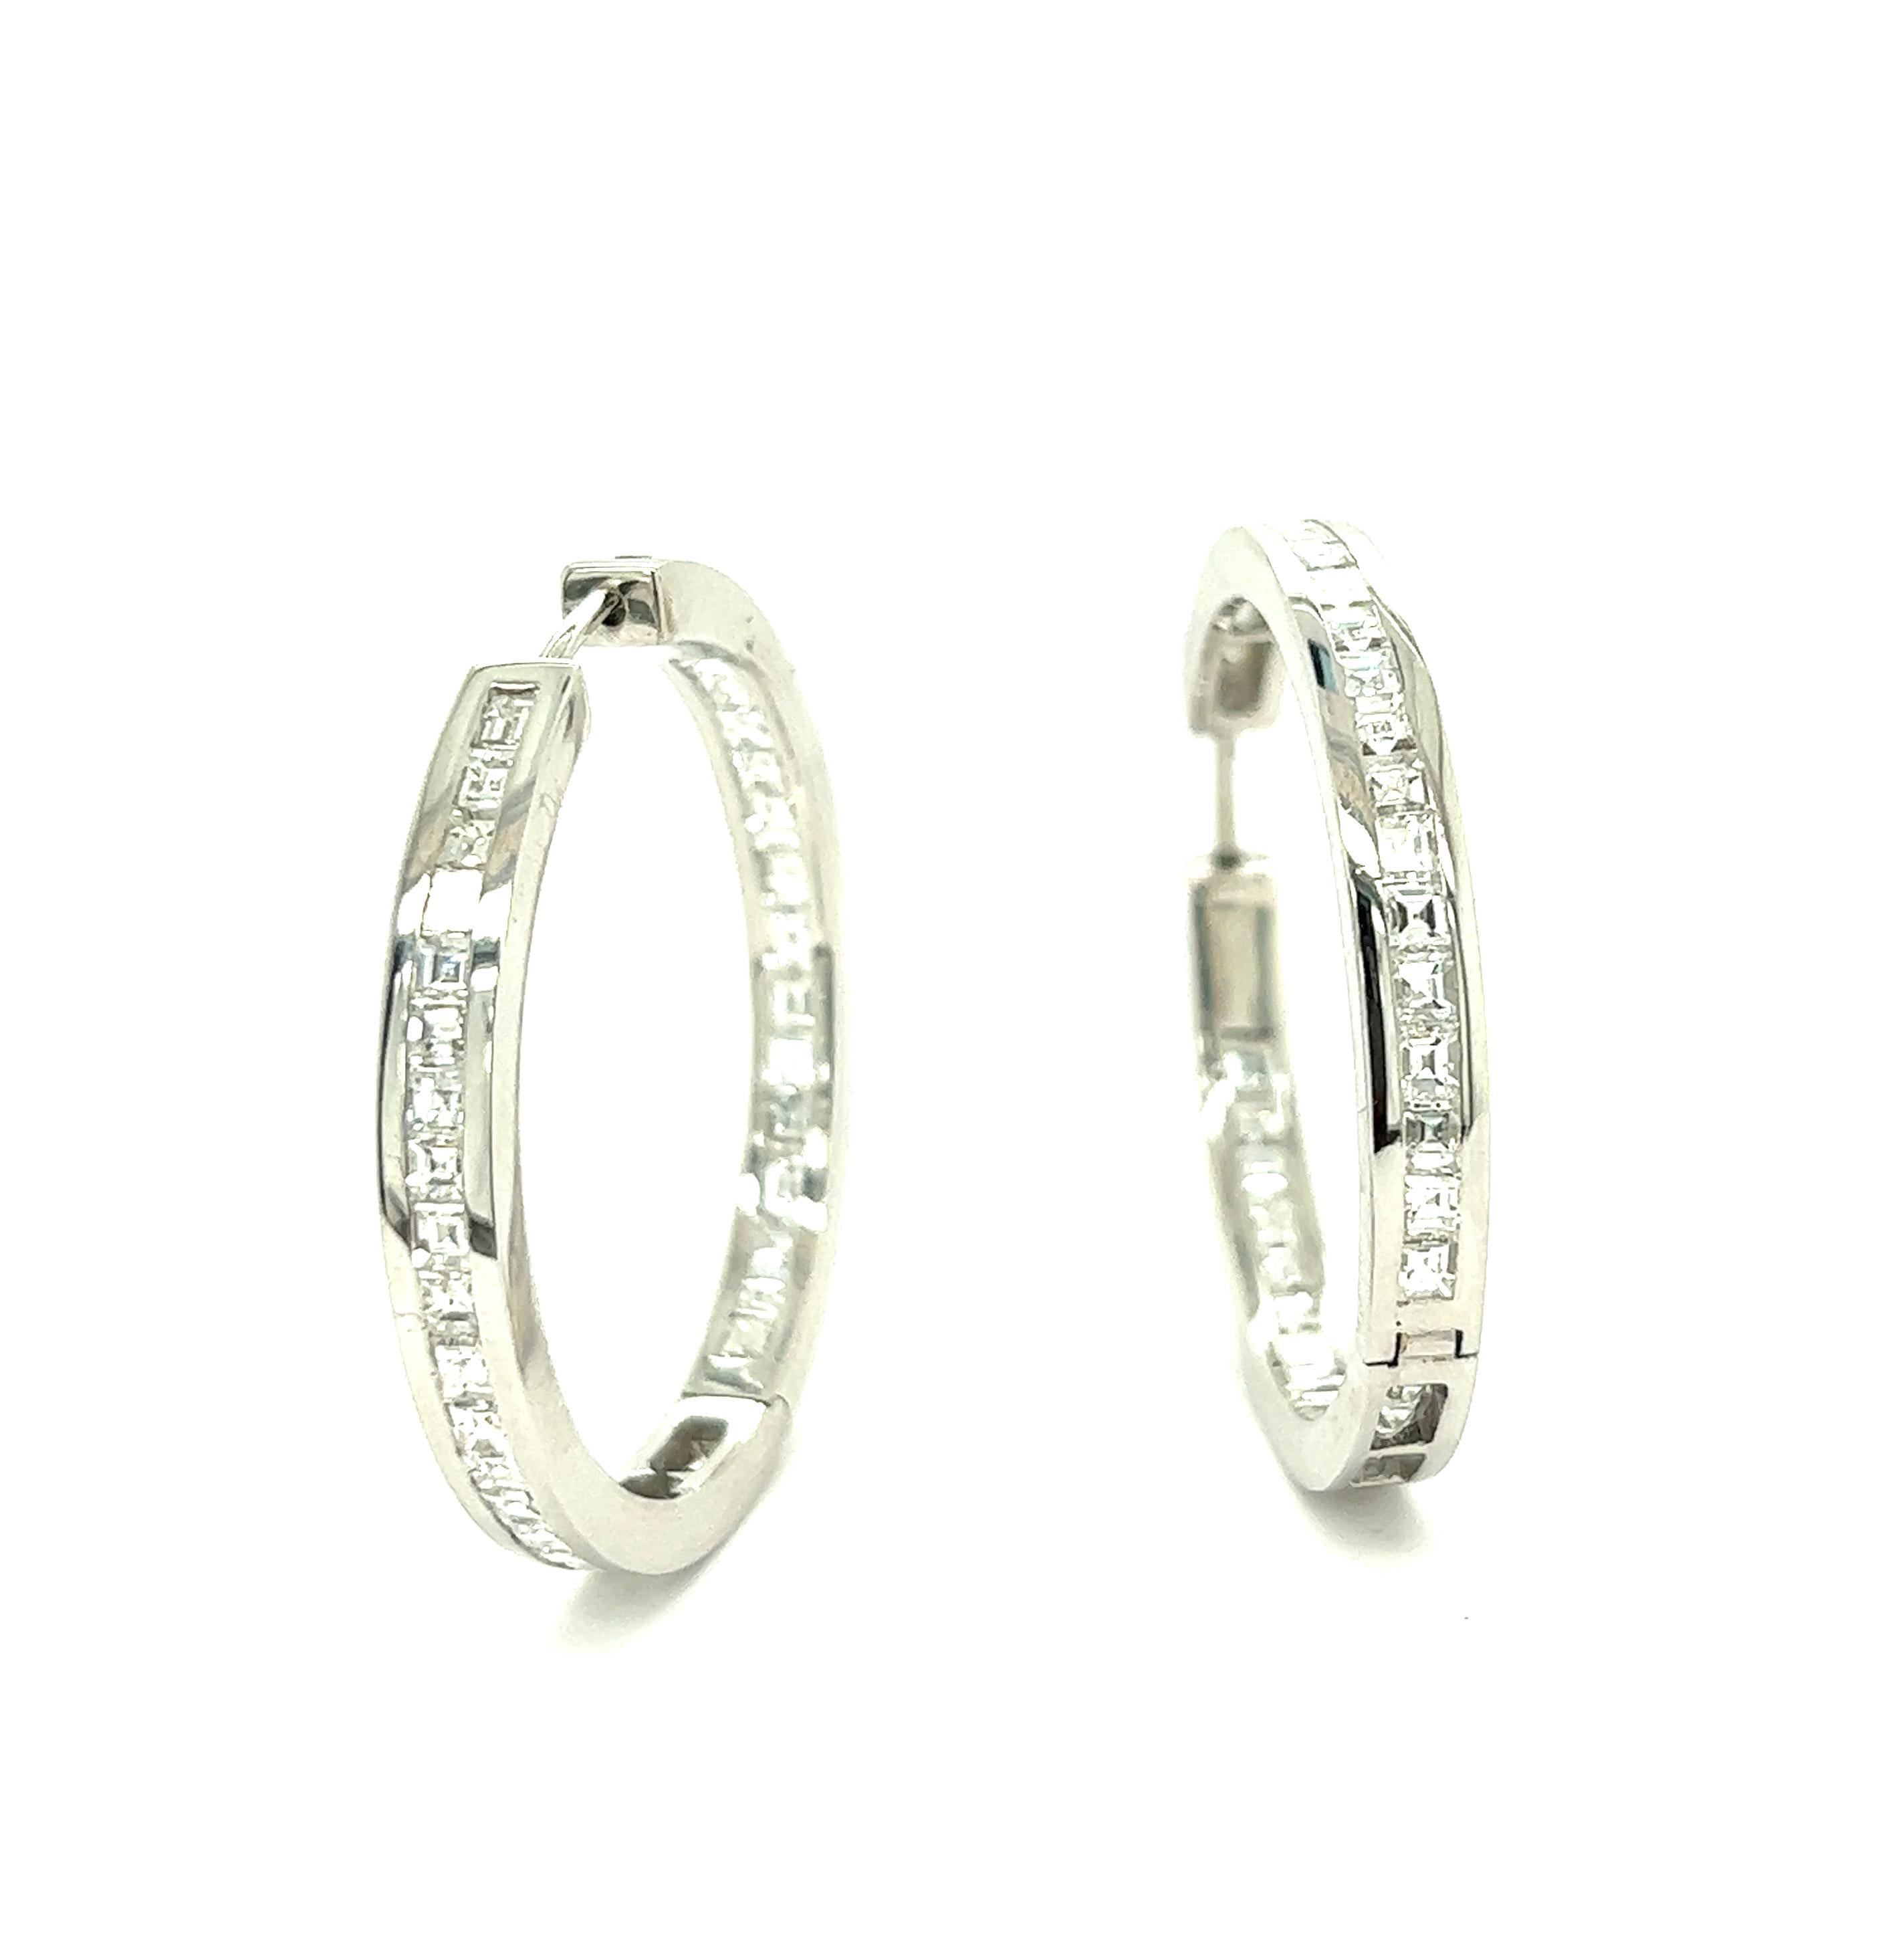 Curnis Diamond 18k White Gold Hoop Earrings

Square-cut diamonds, set on 18 karat white gold; marked Curnis, 750

Hoop diameter: 3.3 cm
Total weight: 14.8 grams